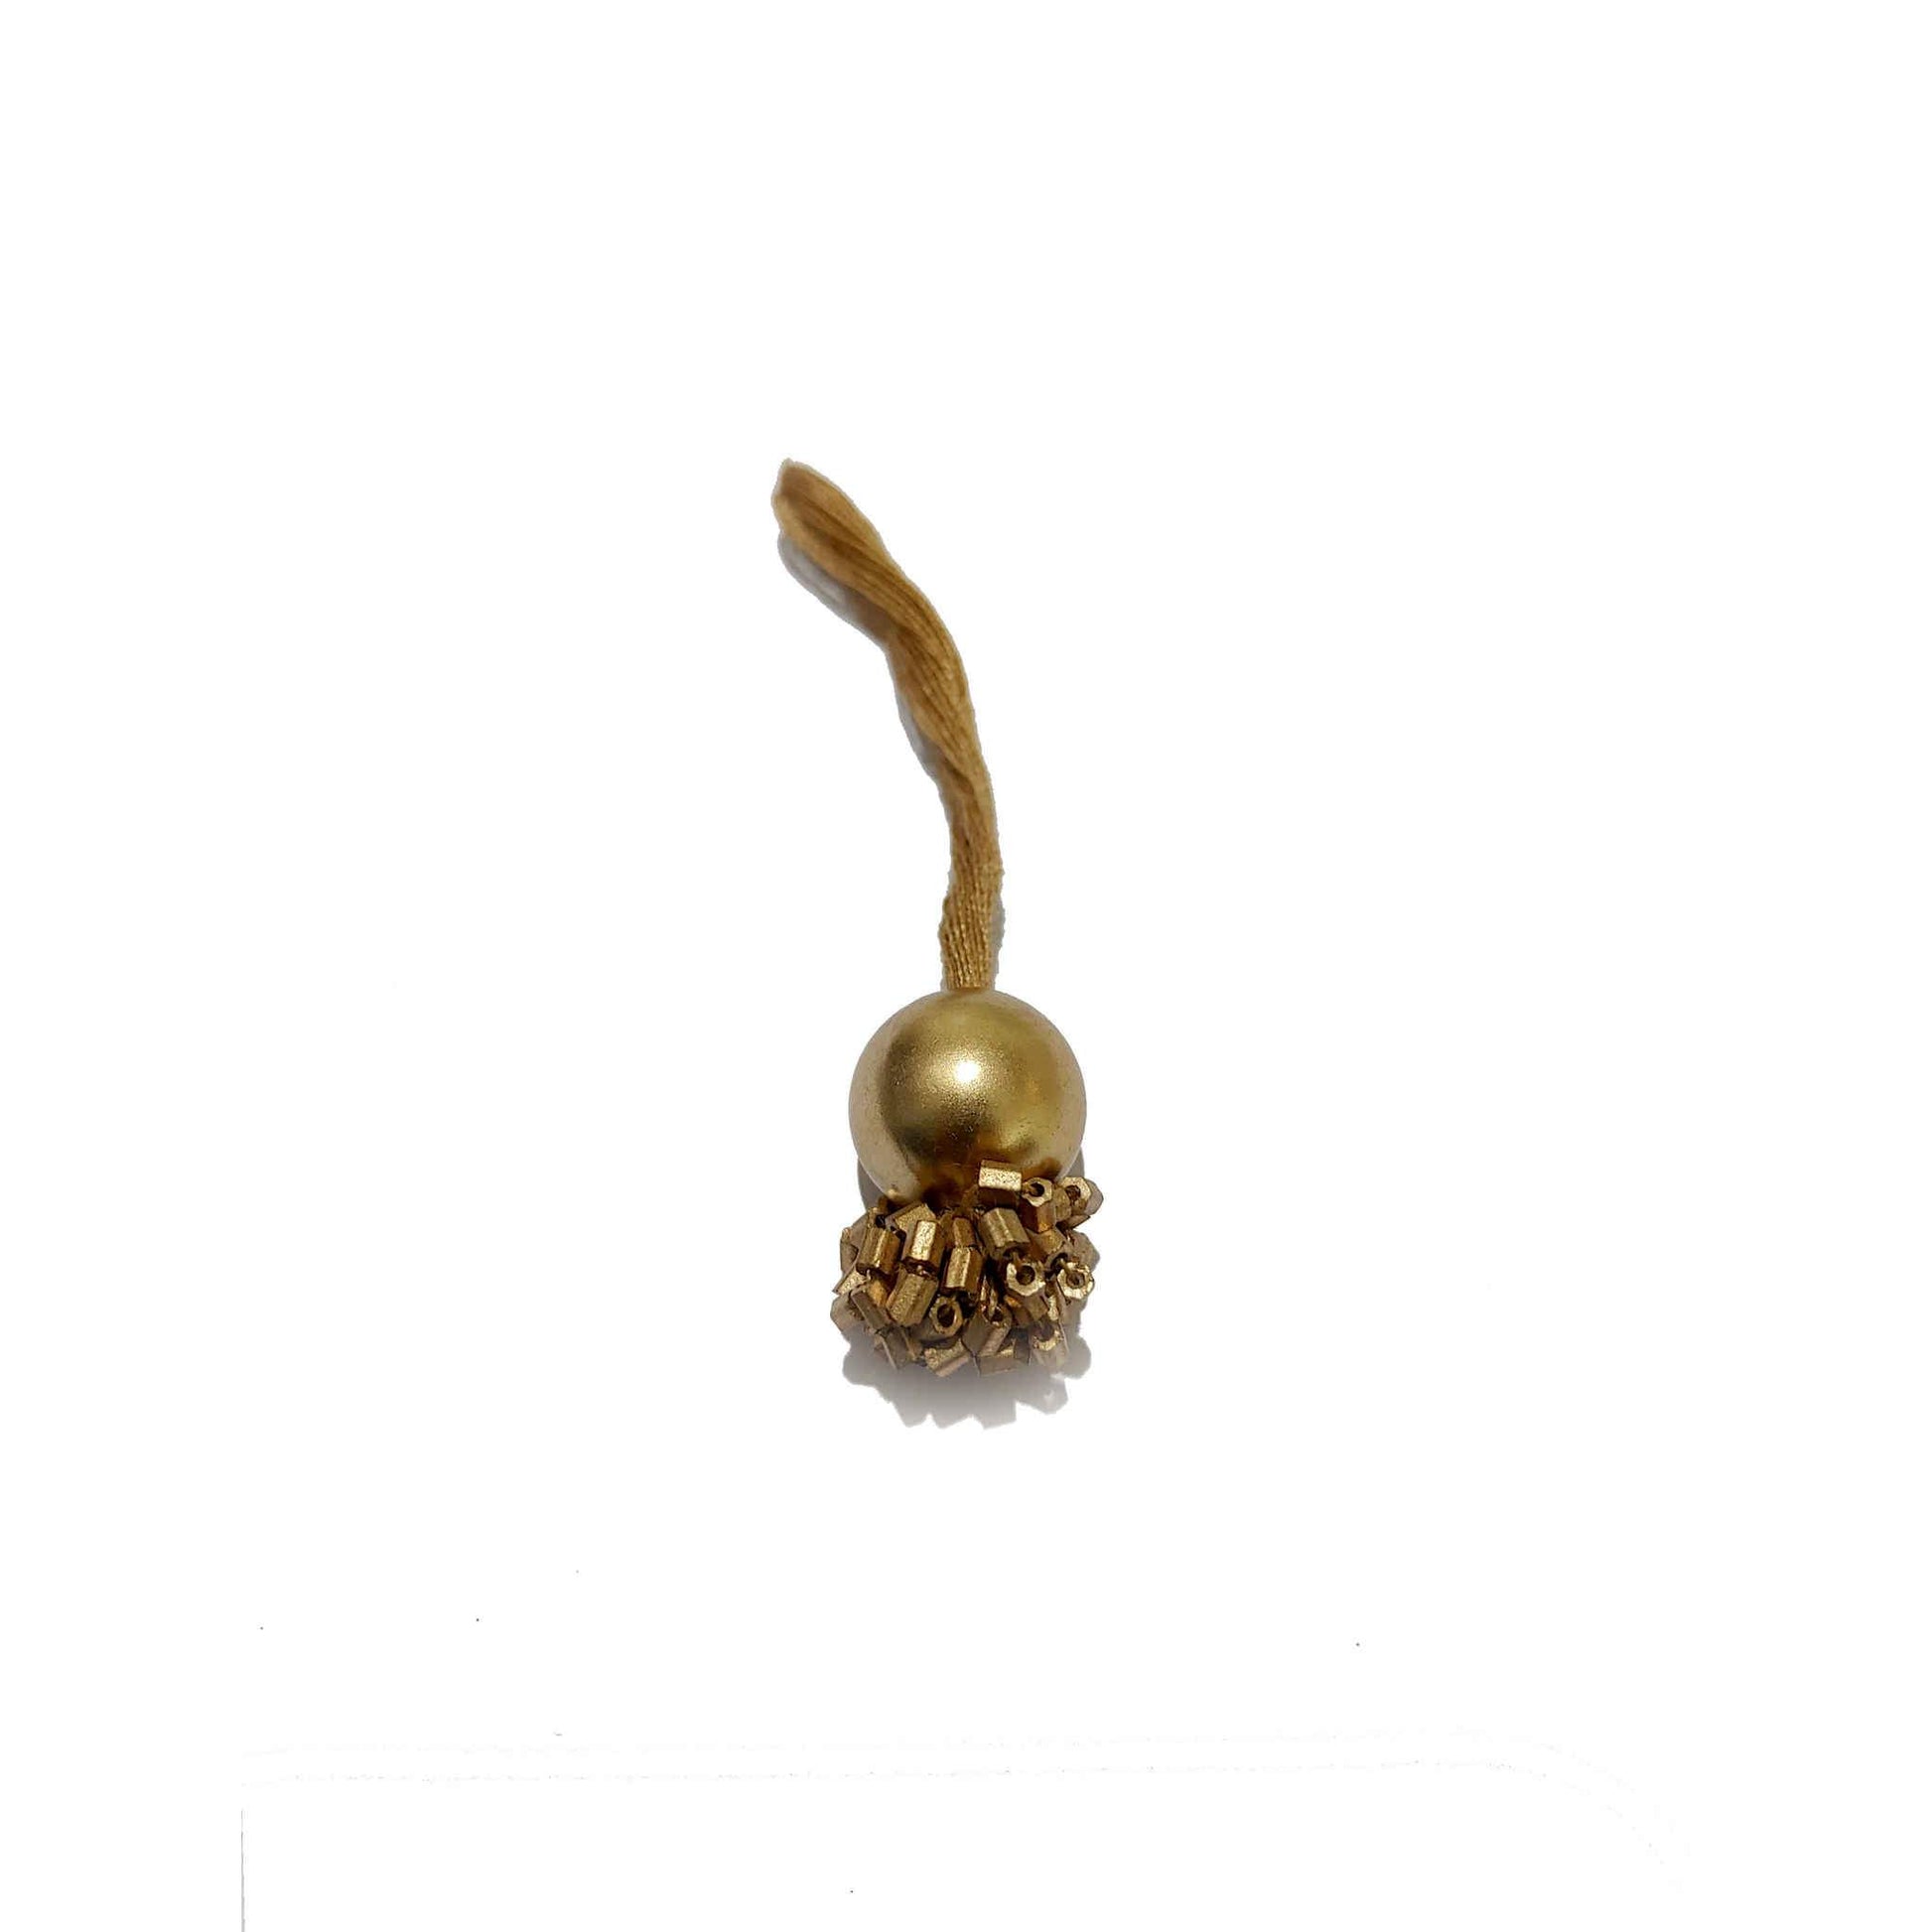 Indian Petals Handmade DIY Craft, Jewelry Cheed Fringe Tassel with Bead Ball - Design 806